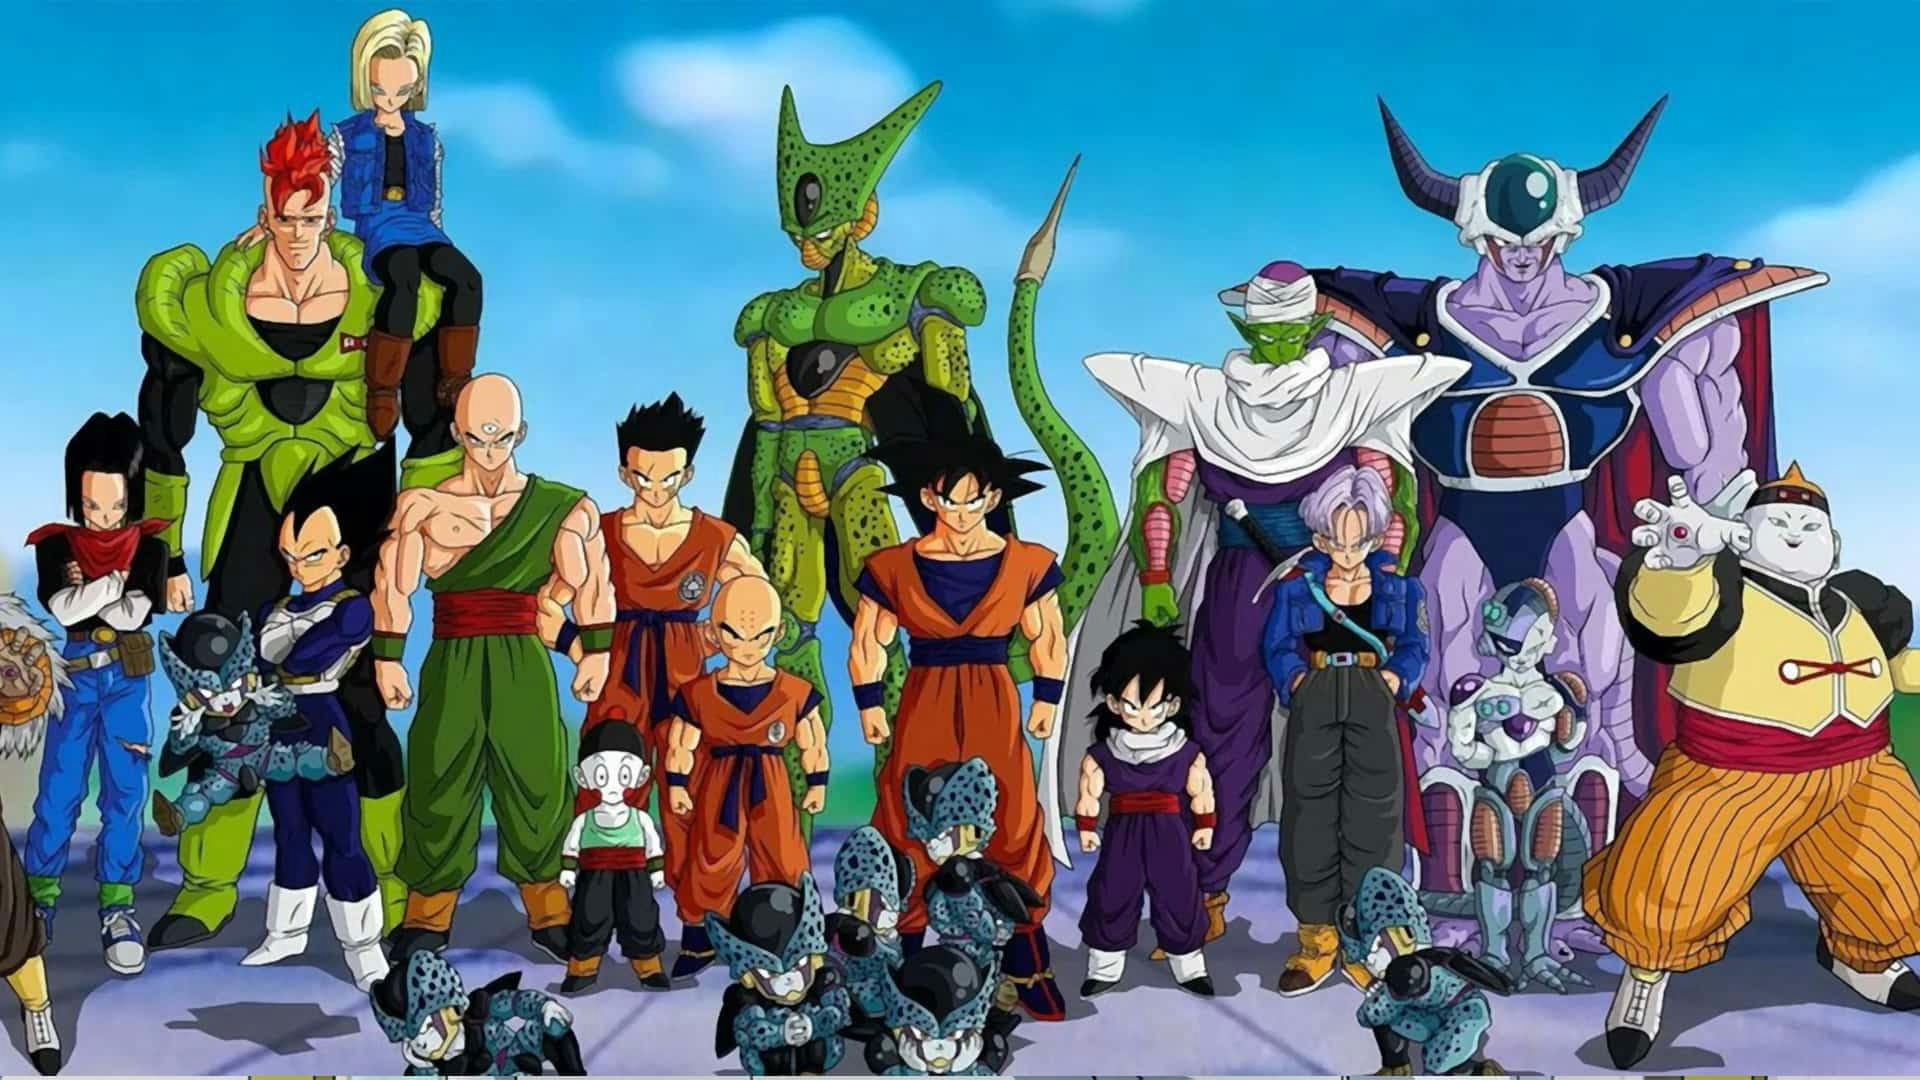 Dragon Ball Z background image